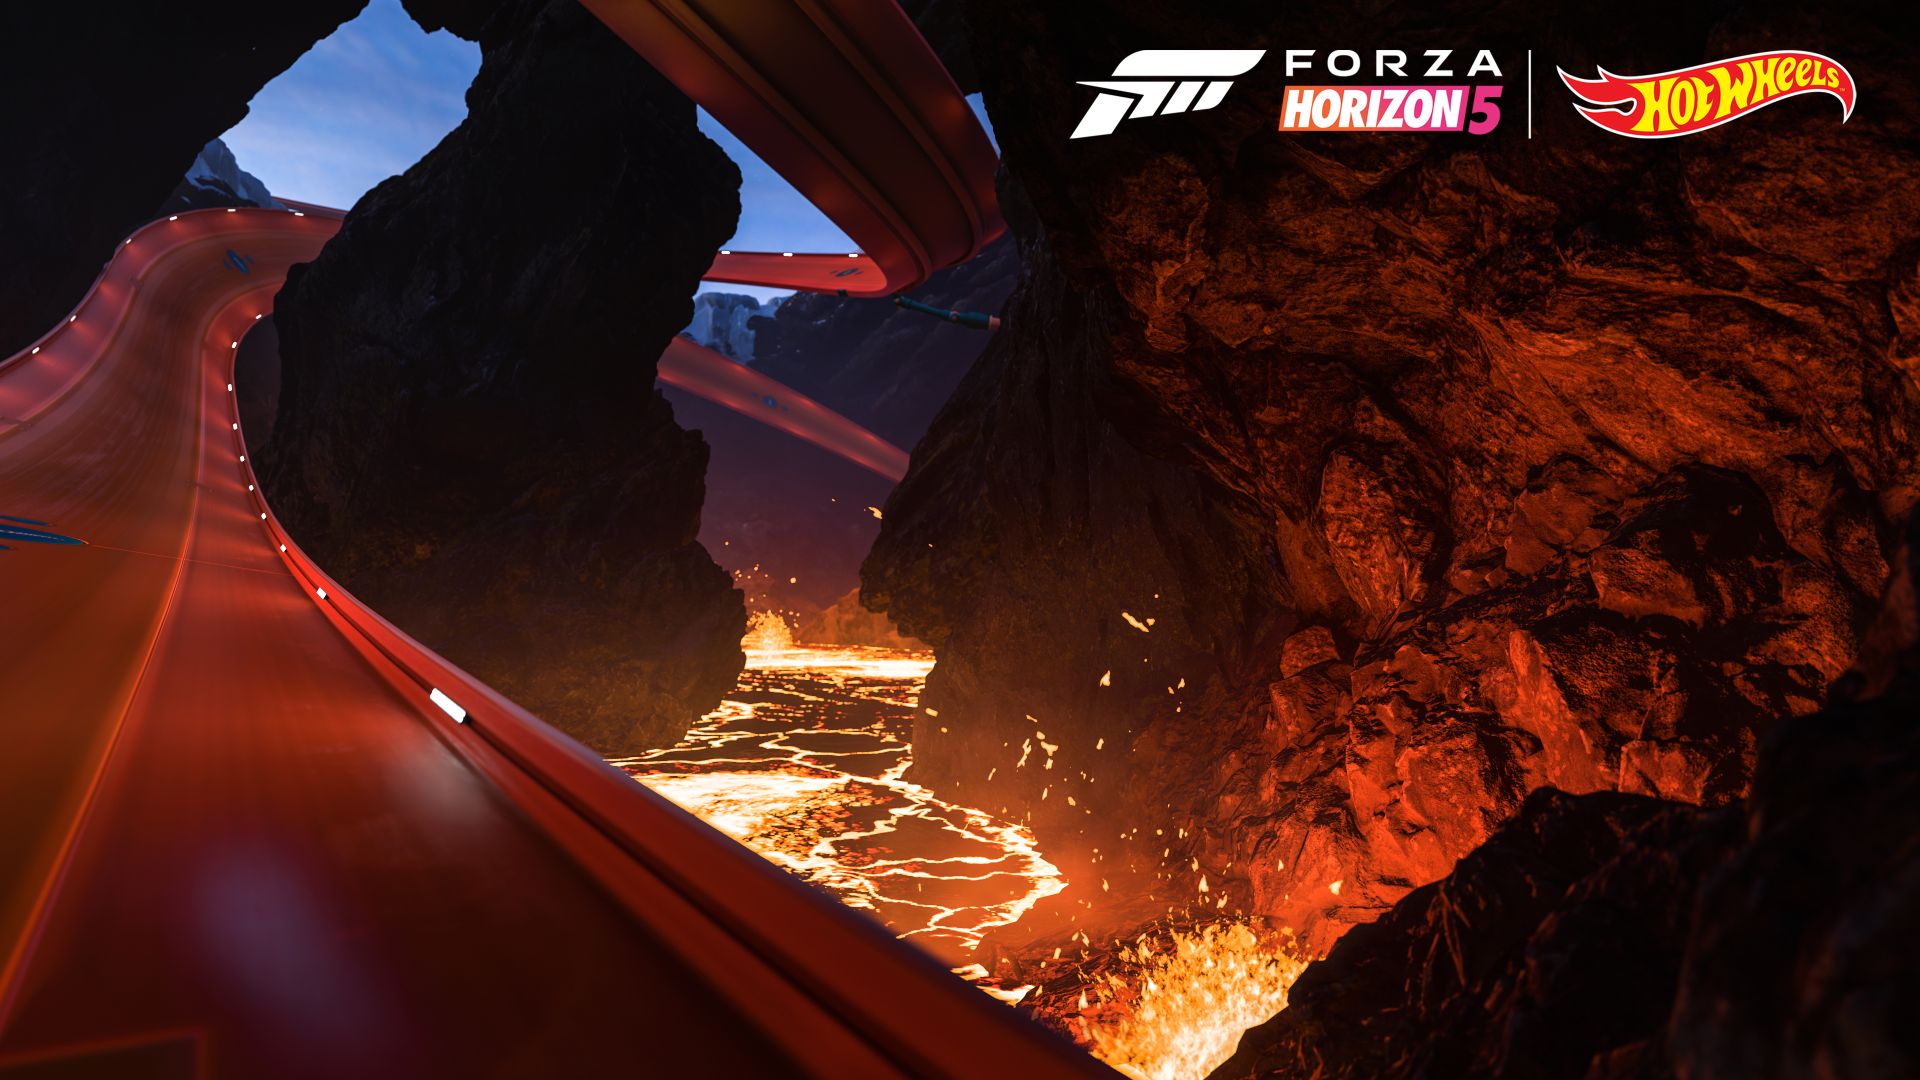 Das Forza Horizon 5: Hot Wheels DLC ist ab sofort verfügbar